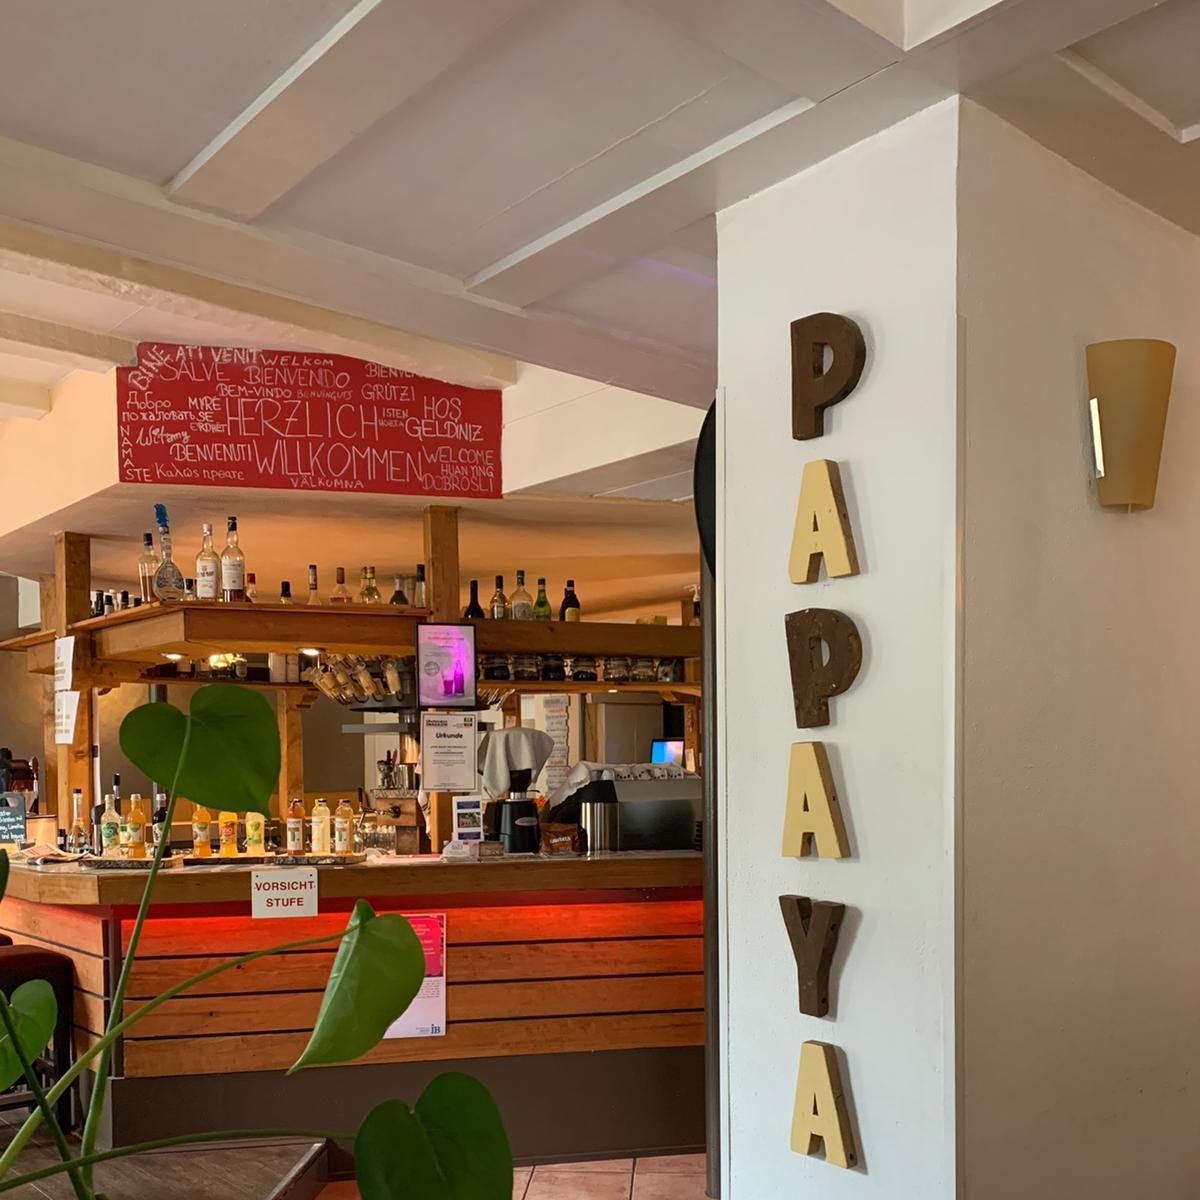 Restaurant "Café Papaya" in Germersheim